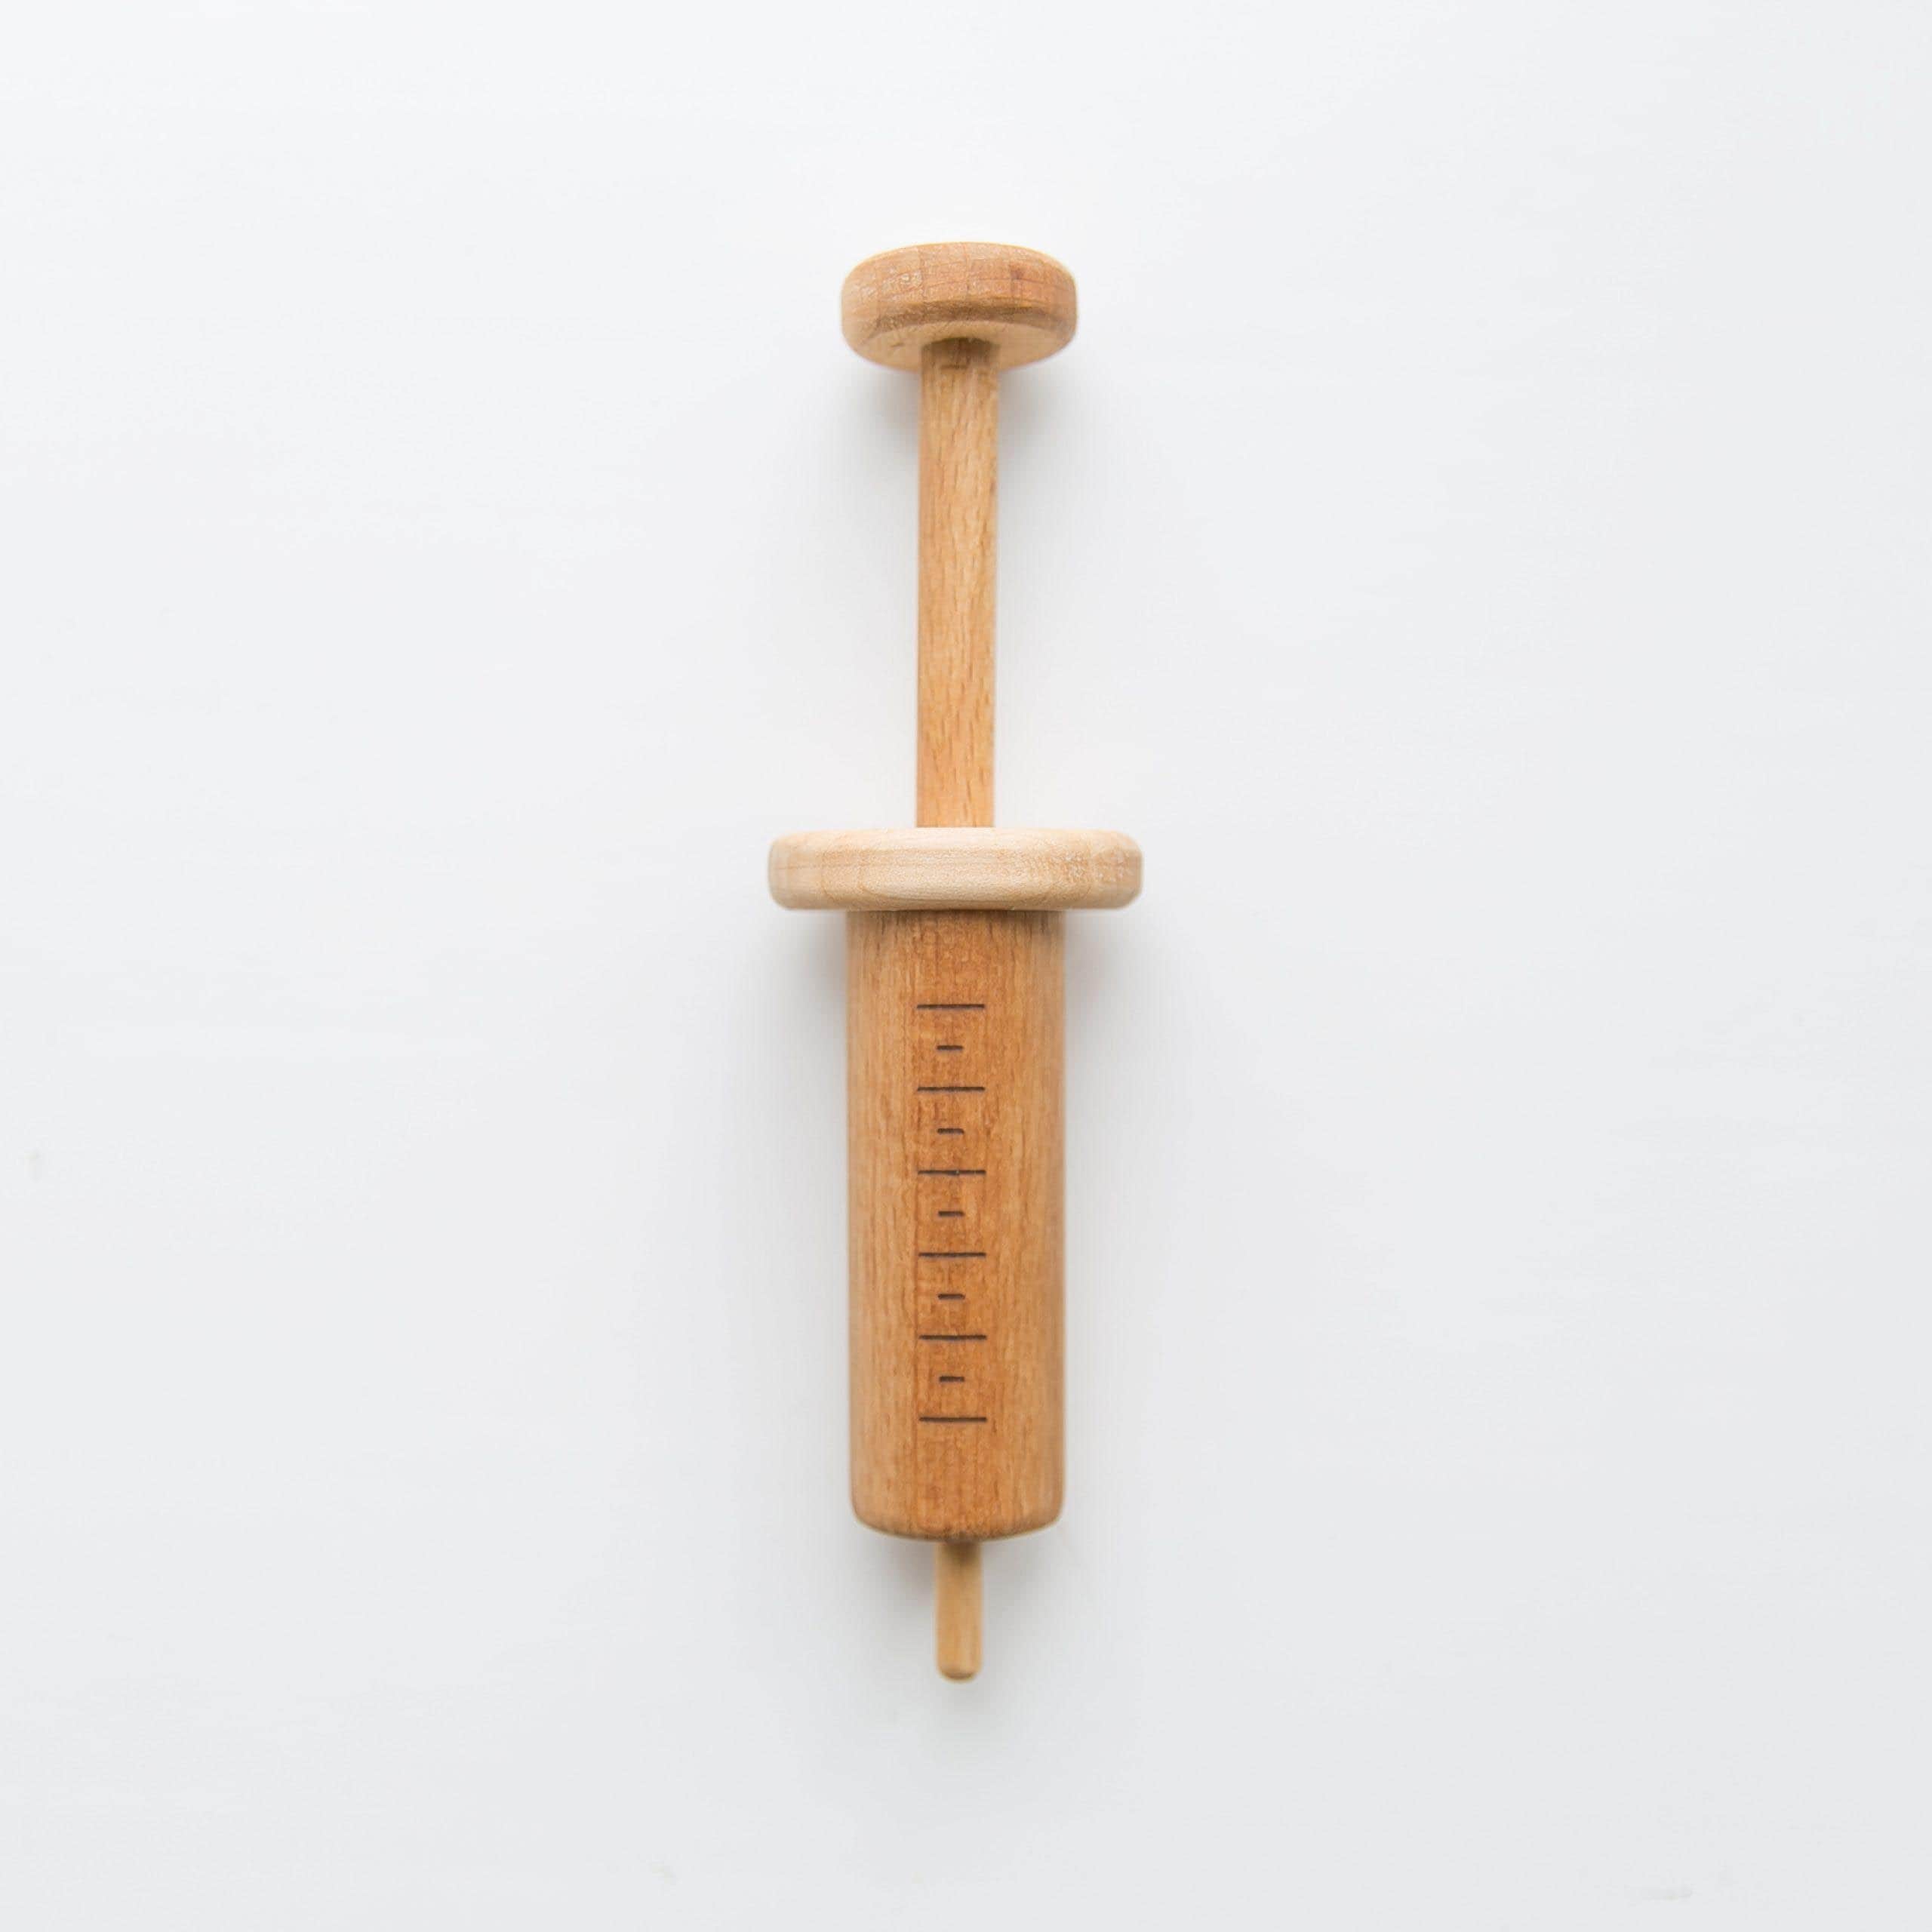 Arztset - wooden toy -7